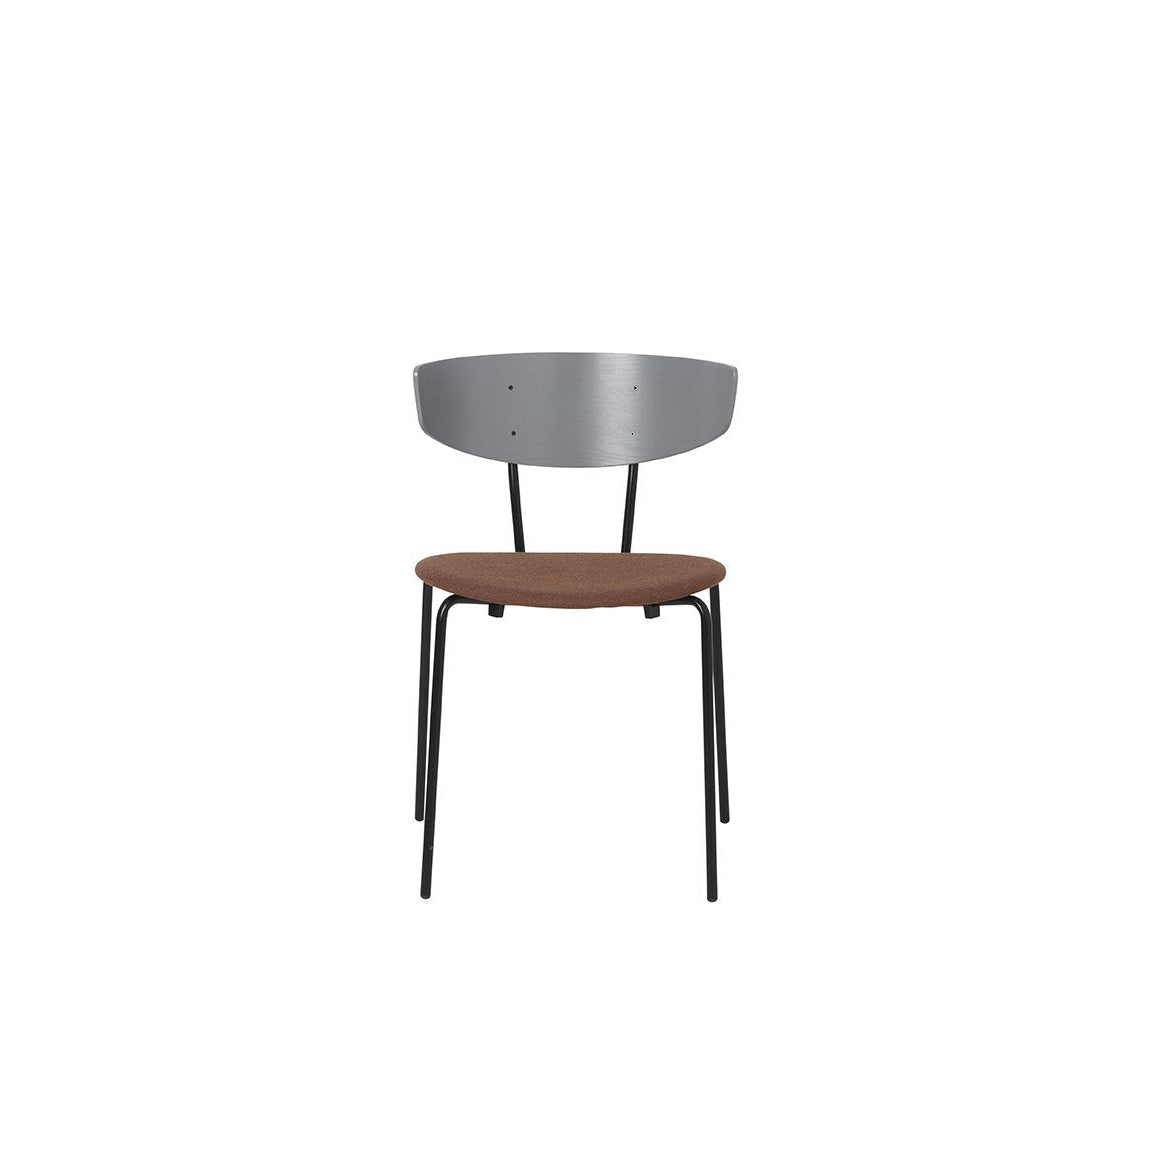 Ferm Living Herman Chair, Grau/Rost